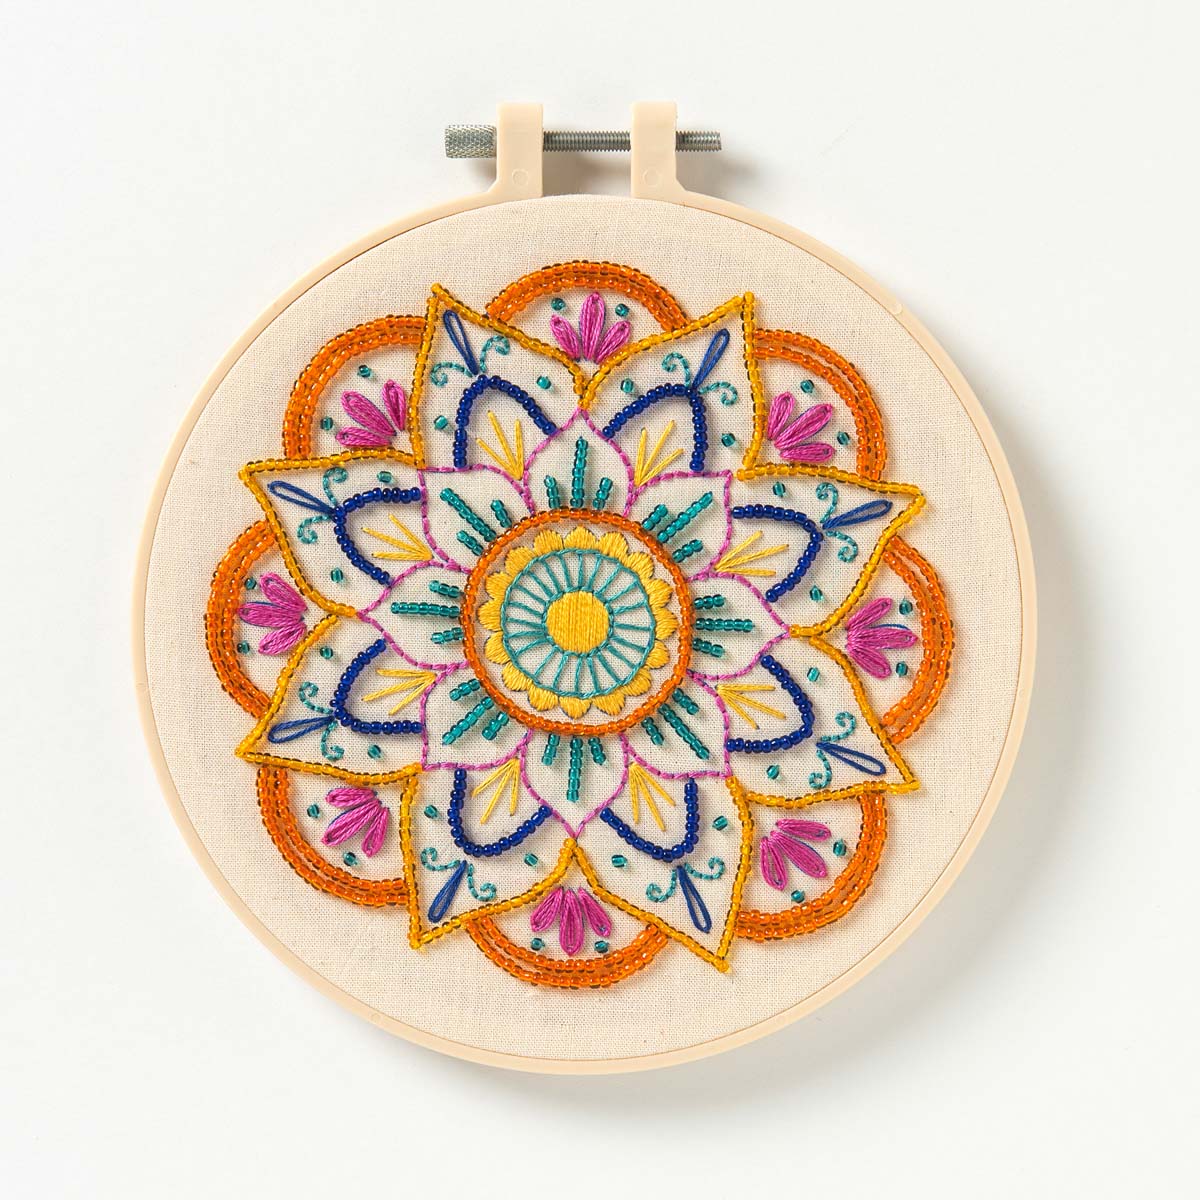 Bucilla ® Stamped Beaded Embroidery - Jeweld Mandala - 49337E